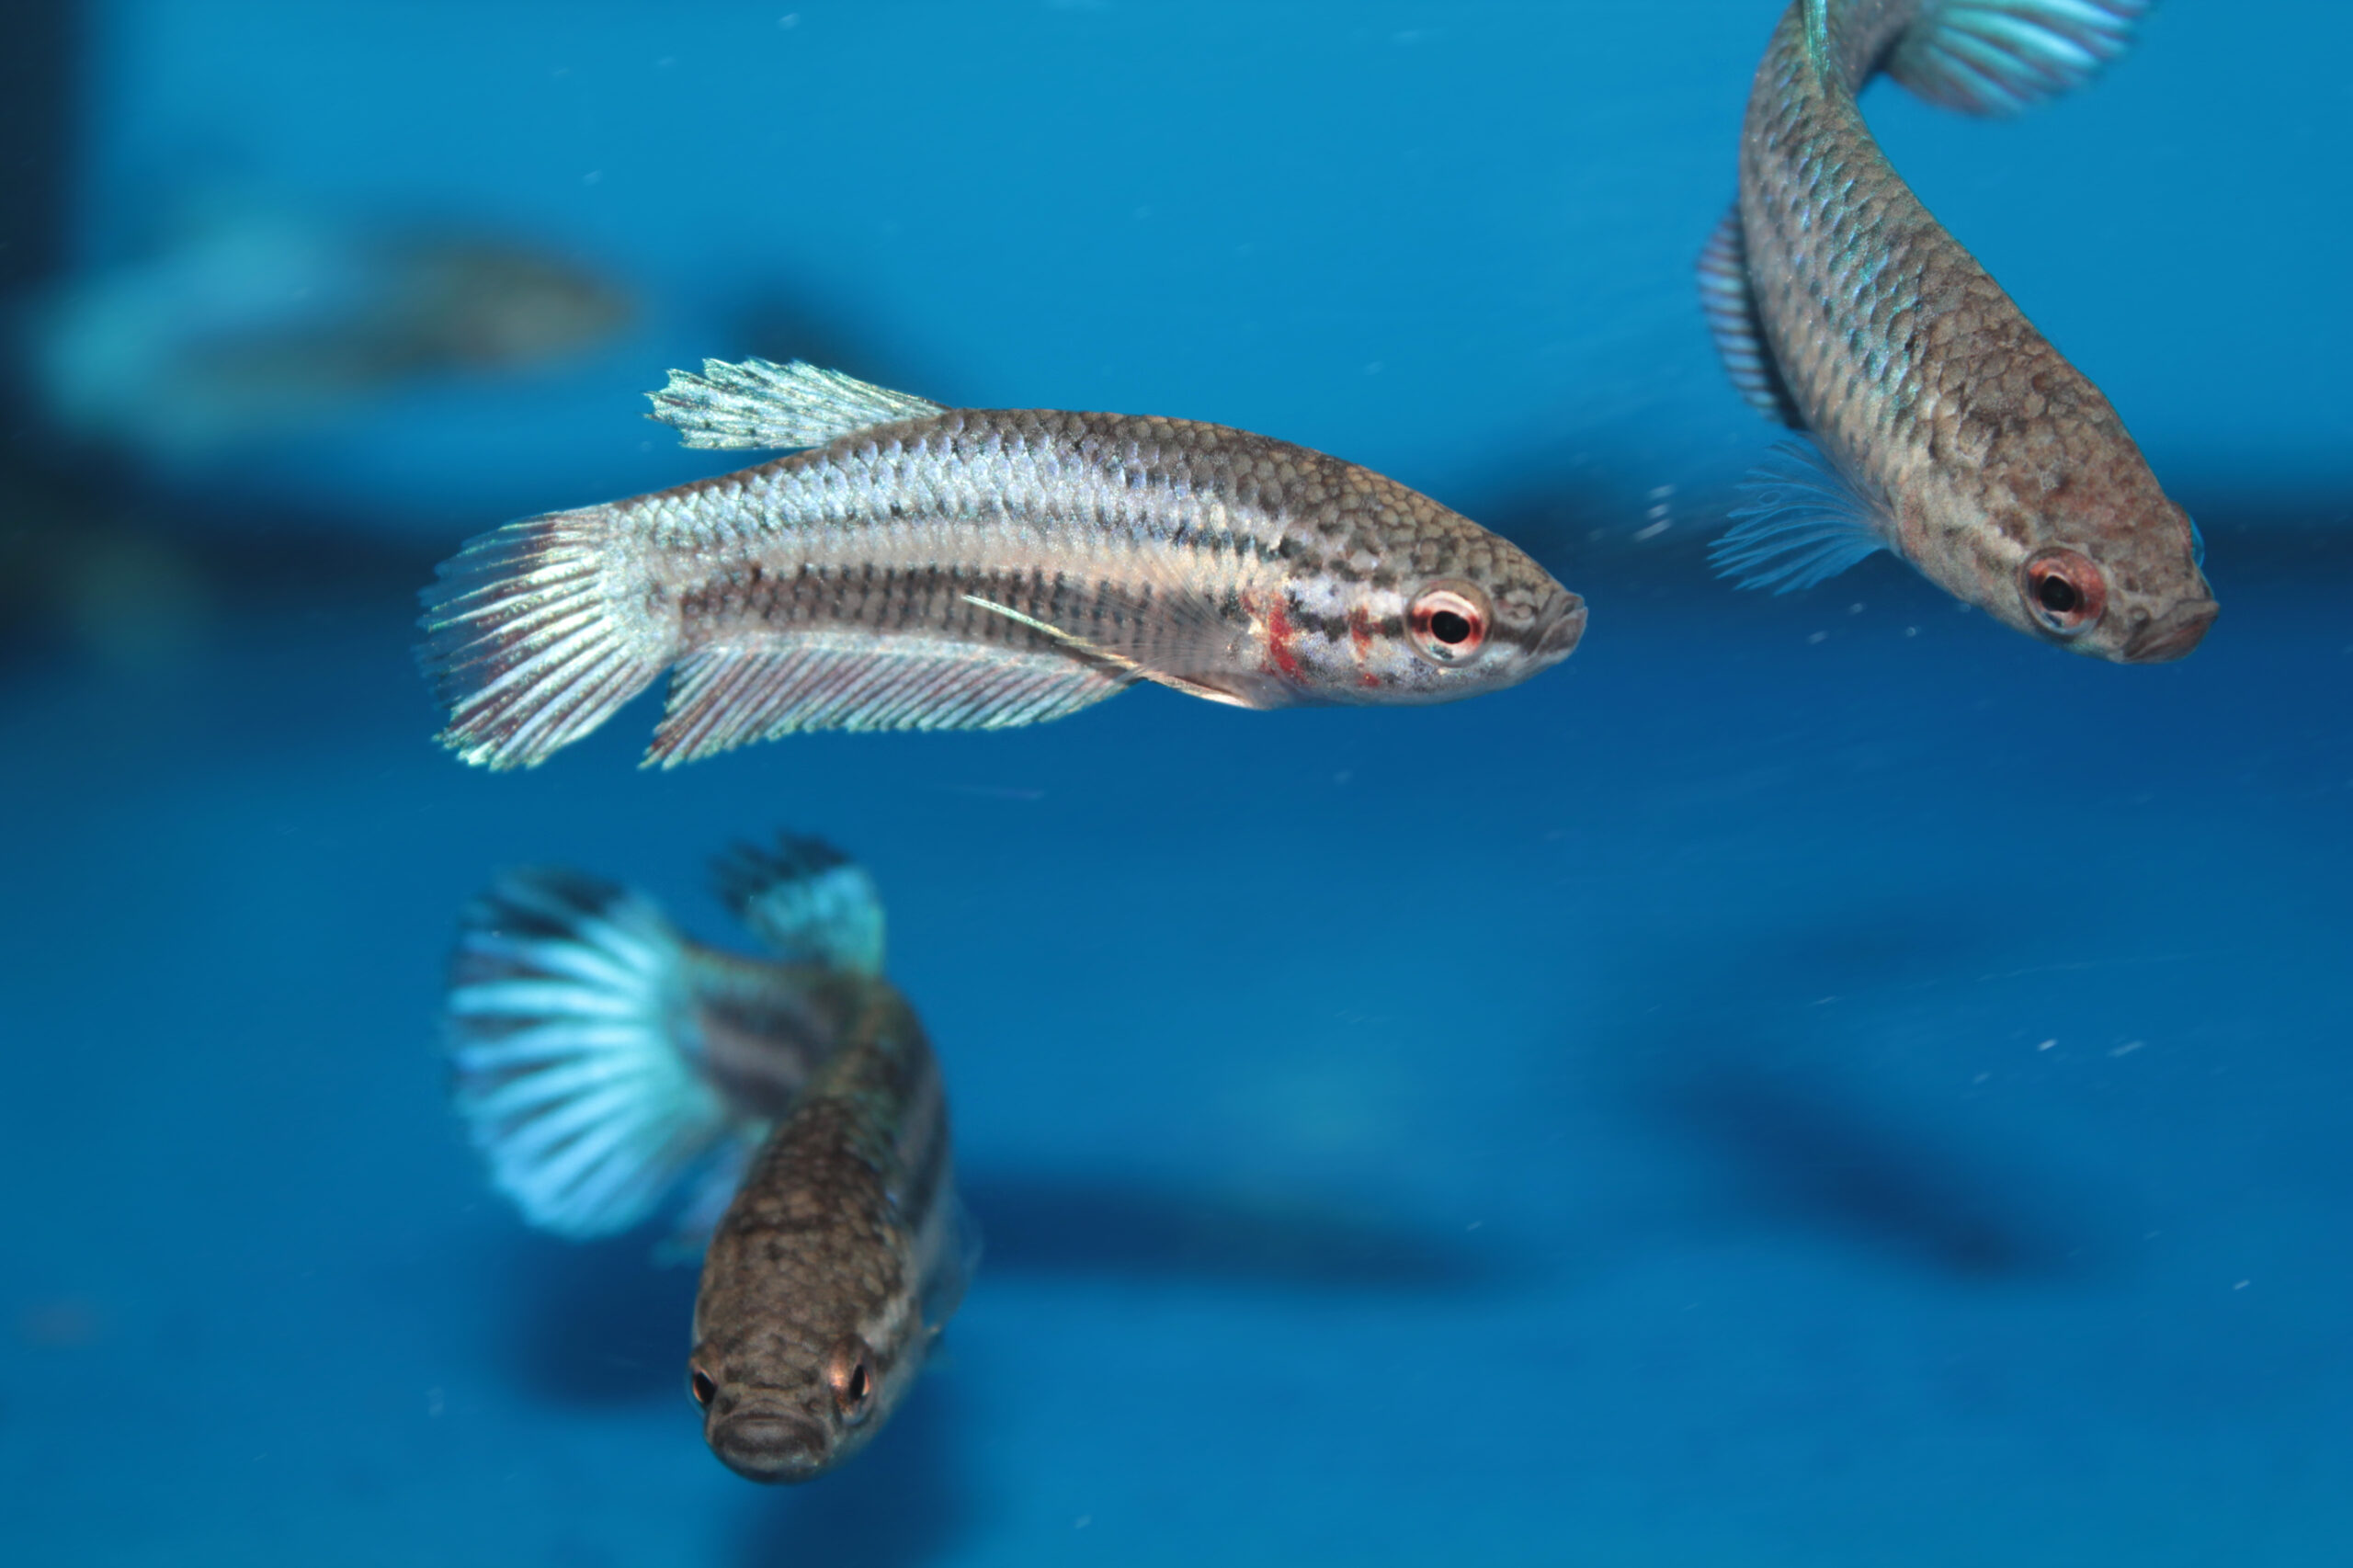 two female betta fish